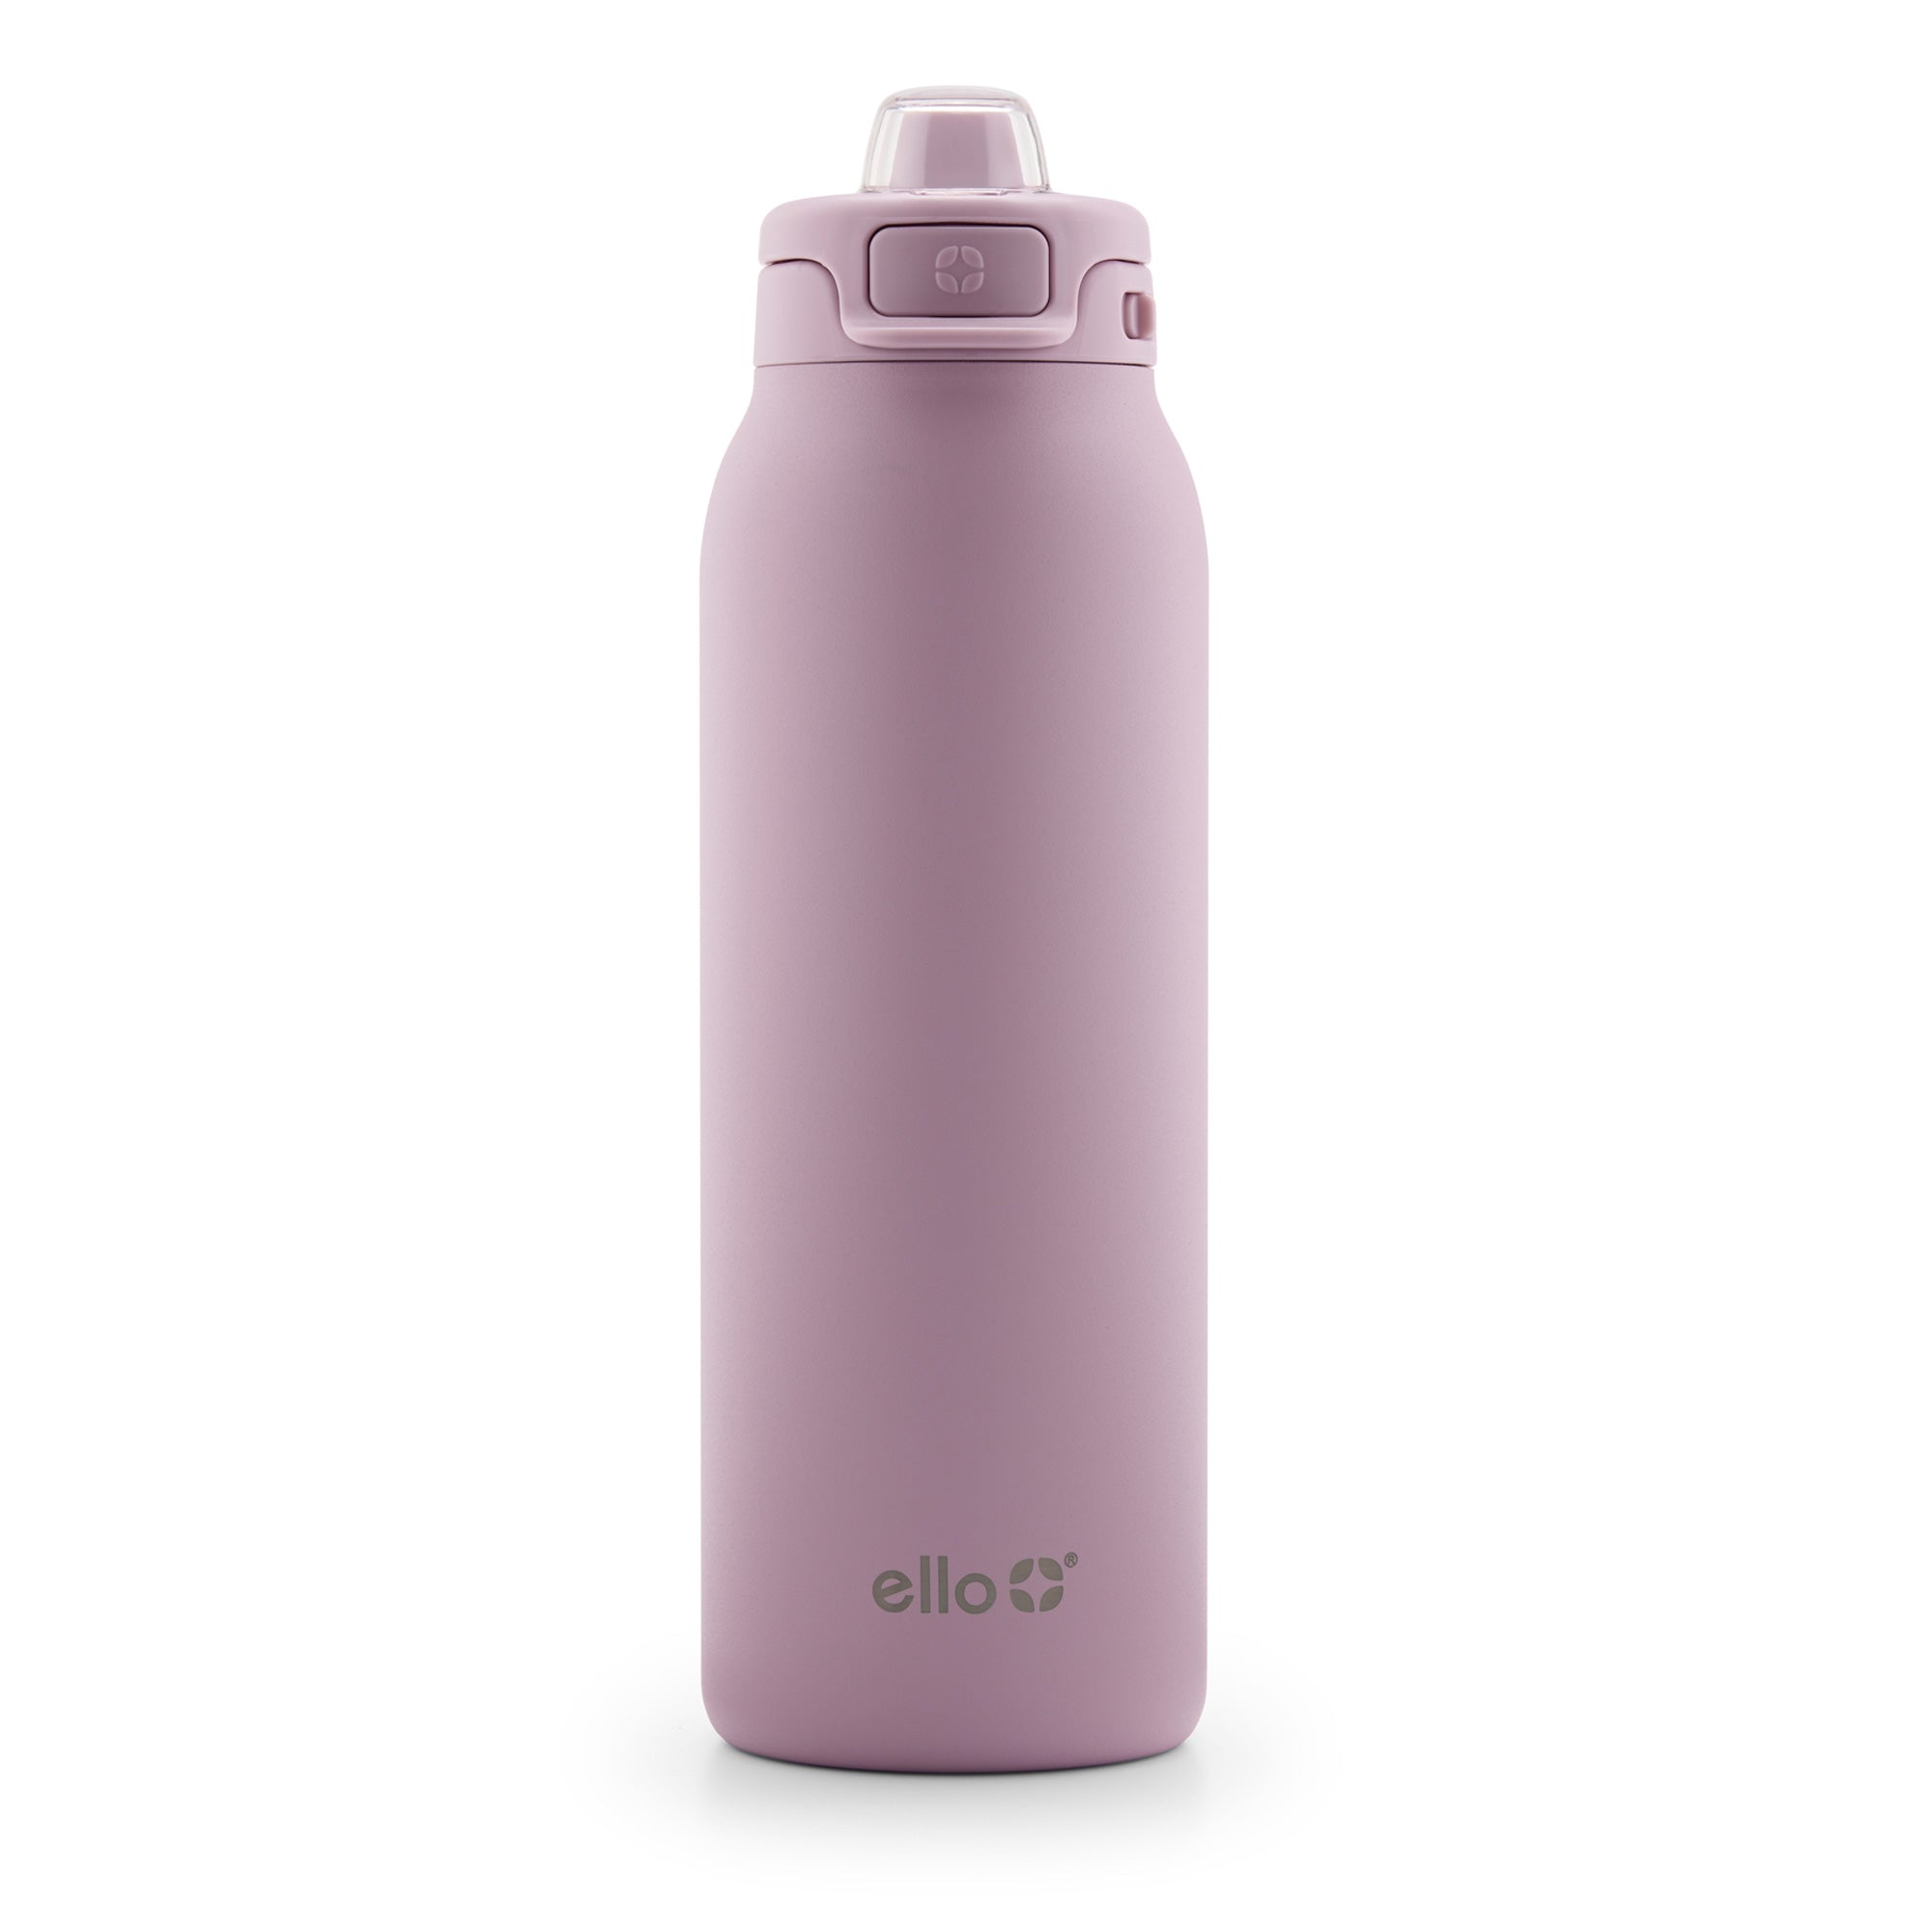 Ello 12oz Stainless Steel Ride Kids' Water Bottle Pink